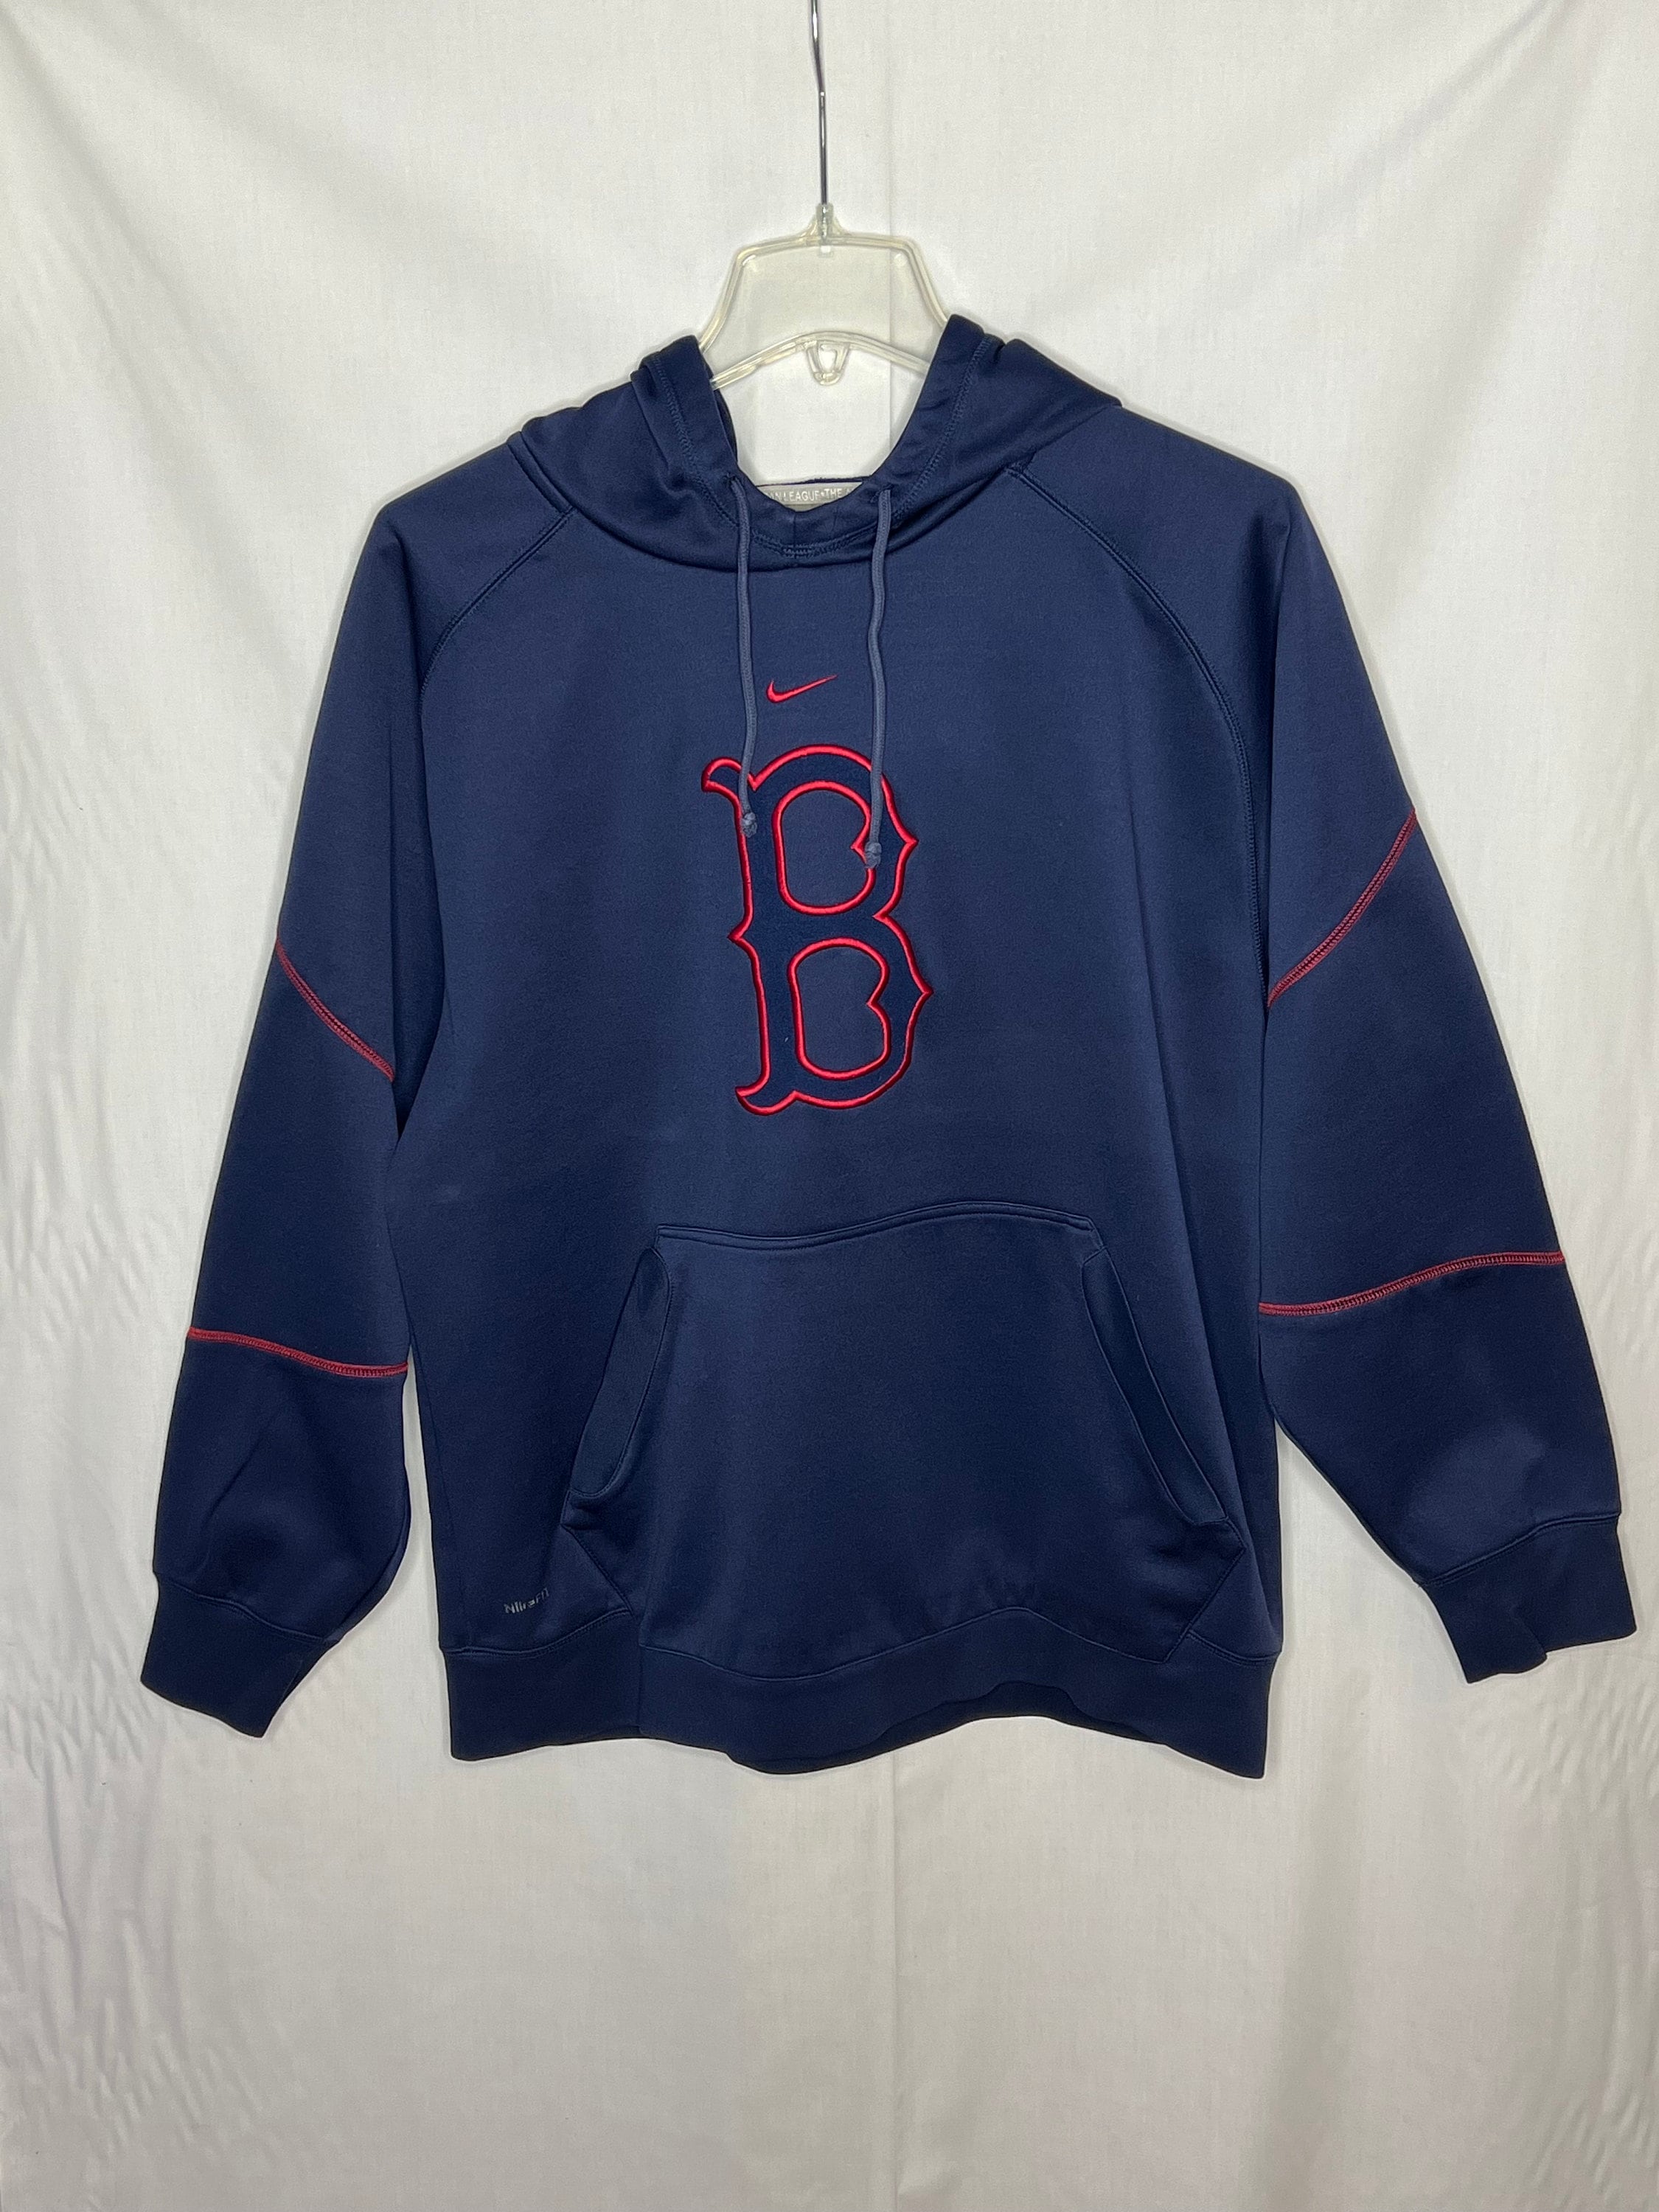 Men’s Nike Boston Red Sox Sweatshirt Hoodie Center Swoosh Adult Medium  Vintage